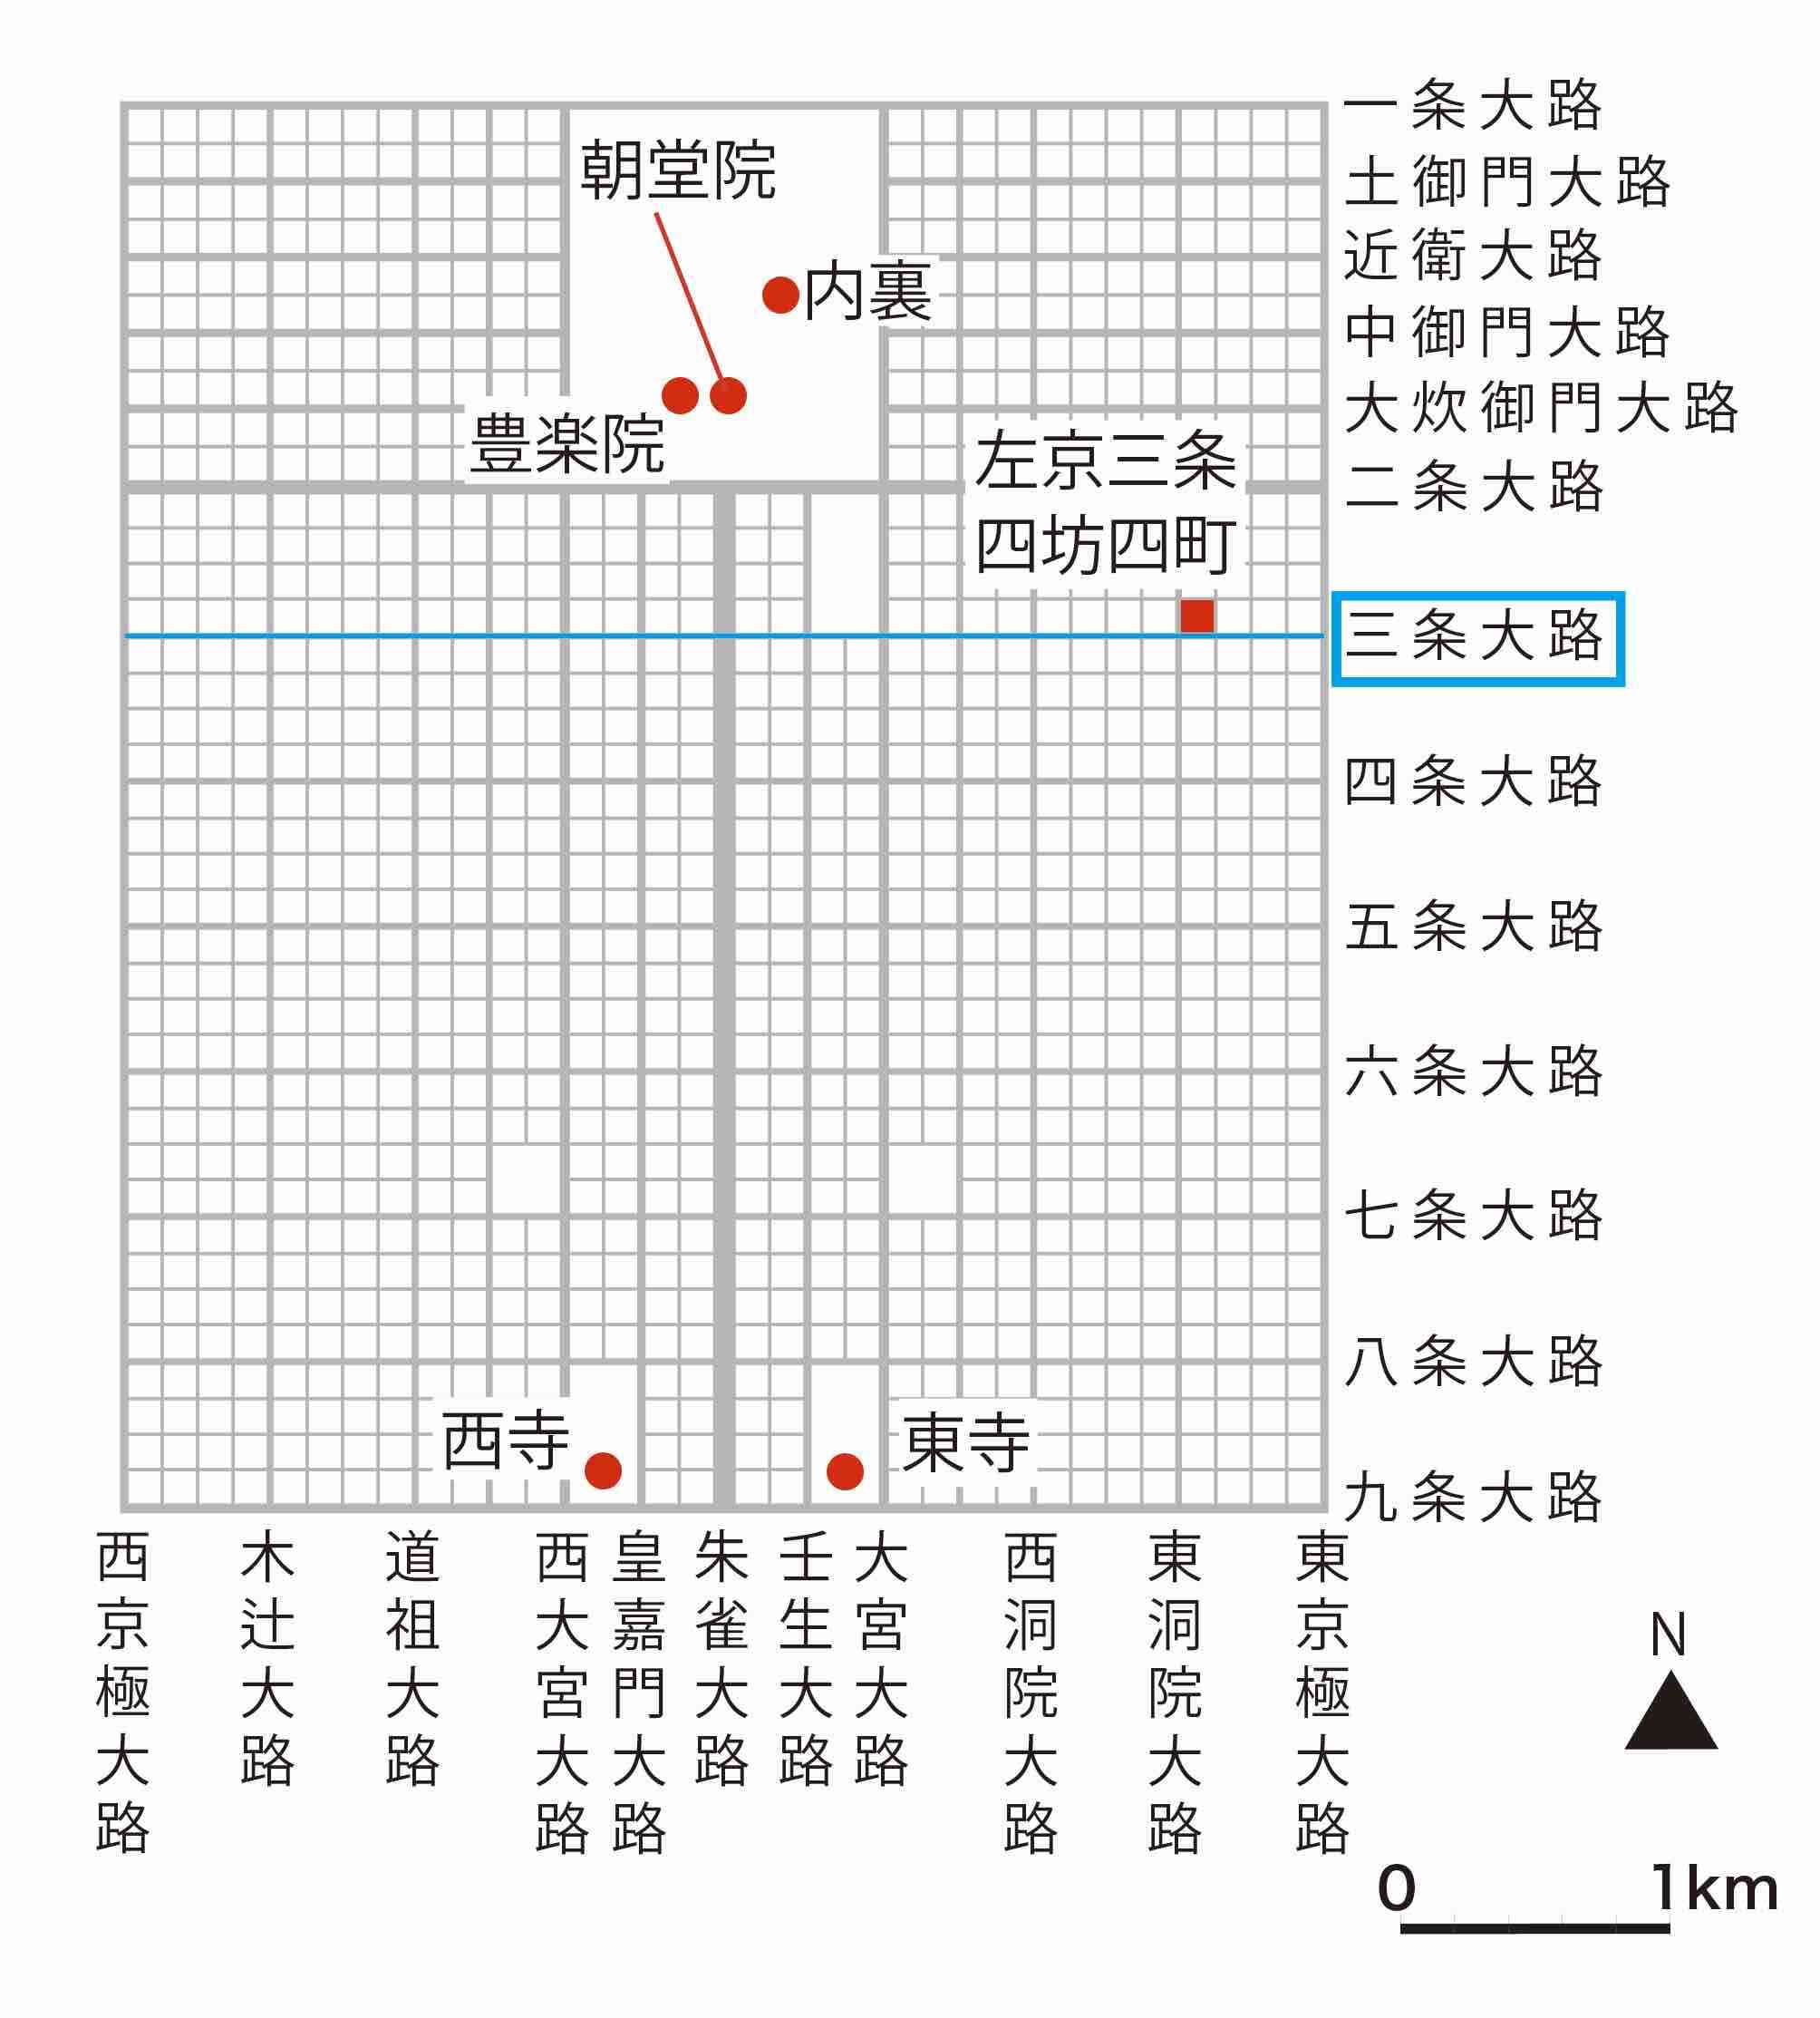 Schematic diagram of Heian-kyo